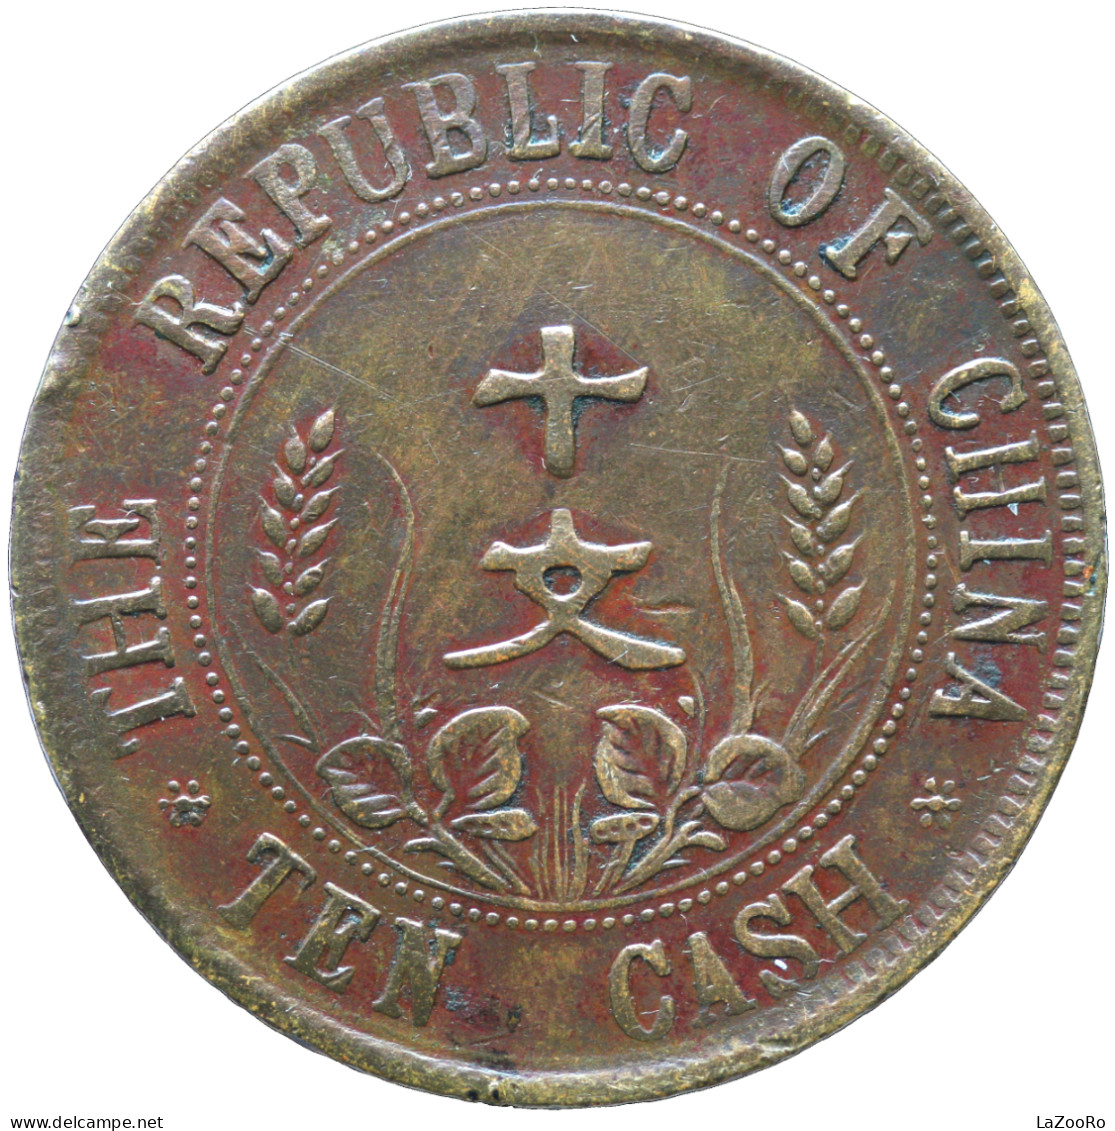 LaZooRo: China 10 Cash 1912 VF Founding Of The Republic - China